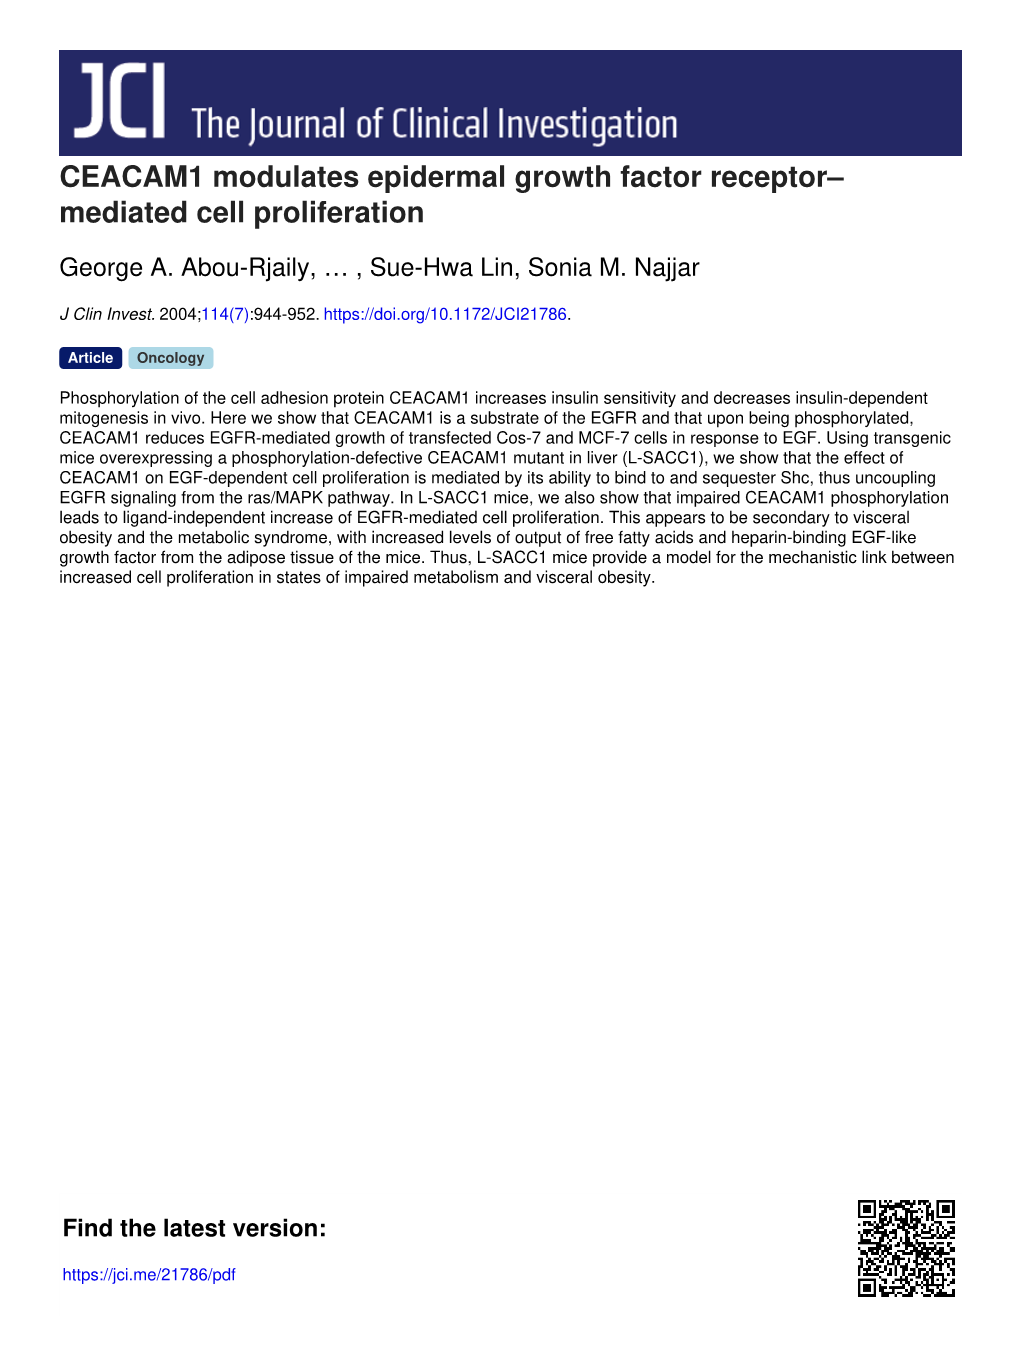 CEACAM1 Modulates Epidermal Growth Factor Receptor– Mediated Cell Proliferation